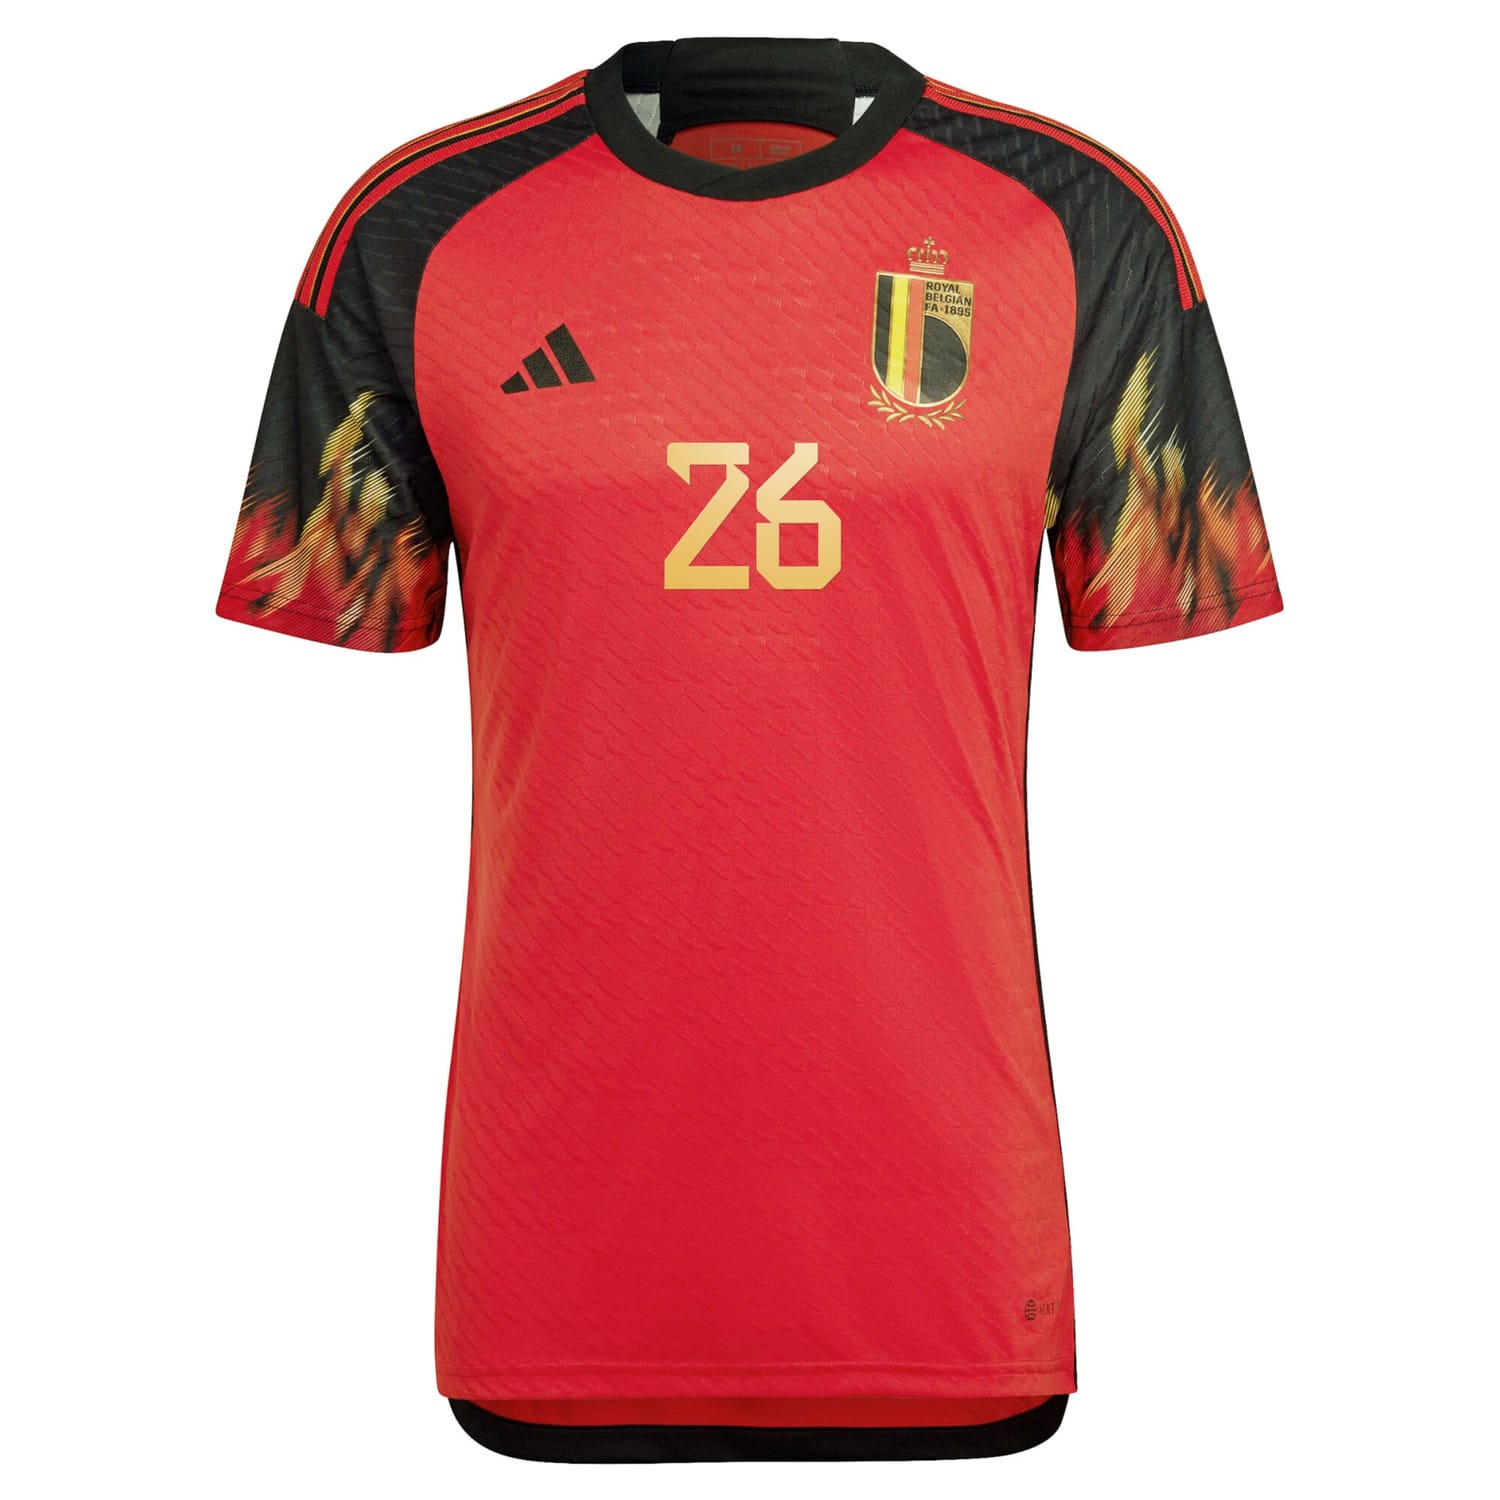 Belgium National Team Home Authentic Jersey Shirt 2022 player Zeno Debast 26 printing for Men